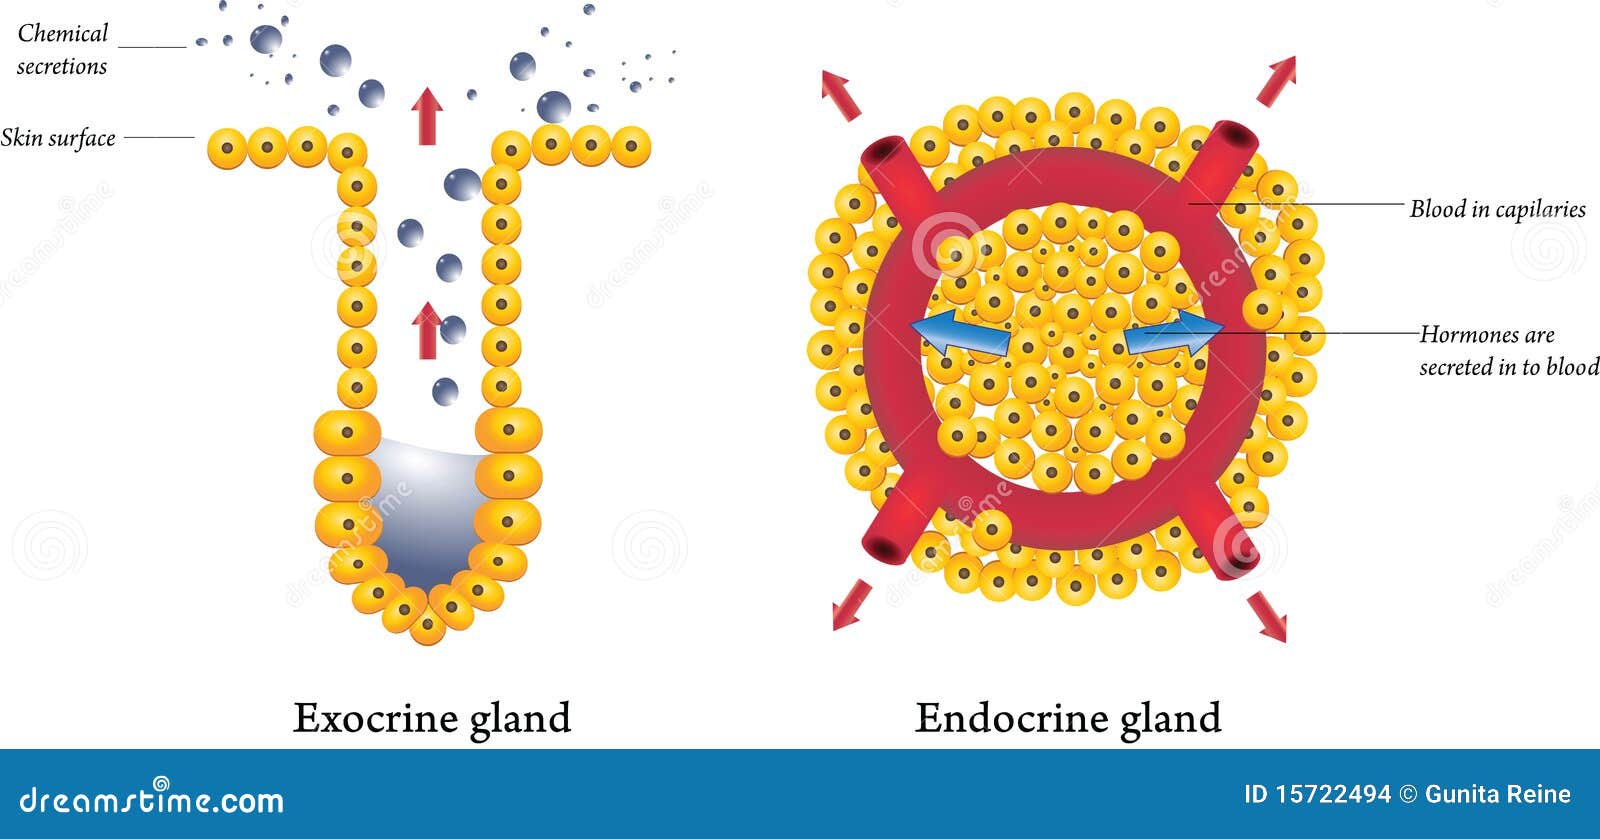 exocrine and endocrine glands